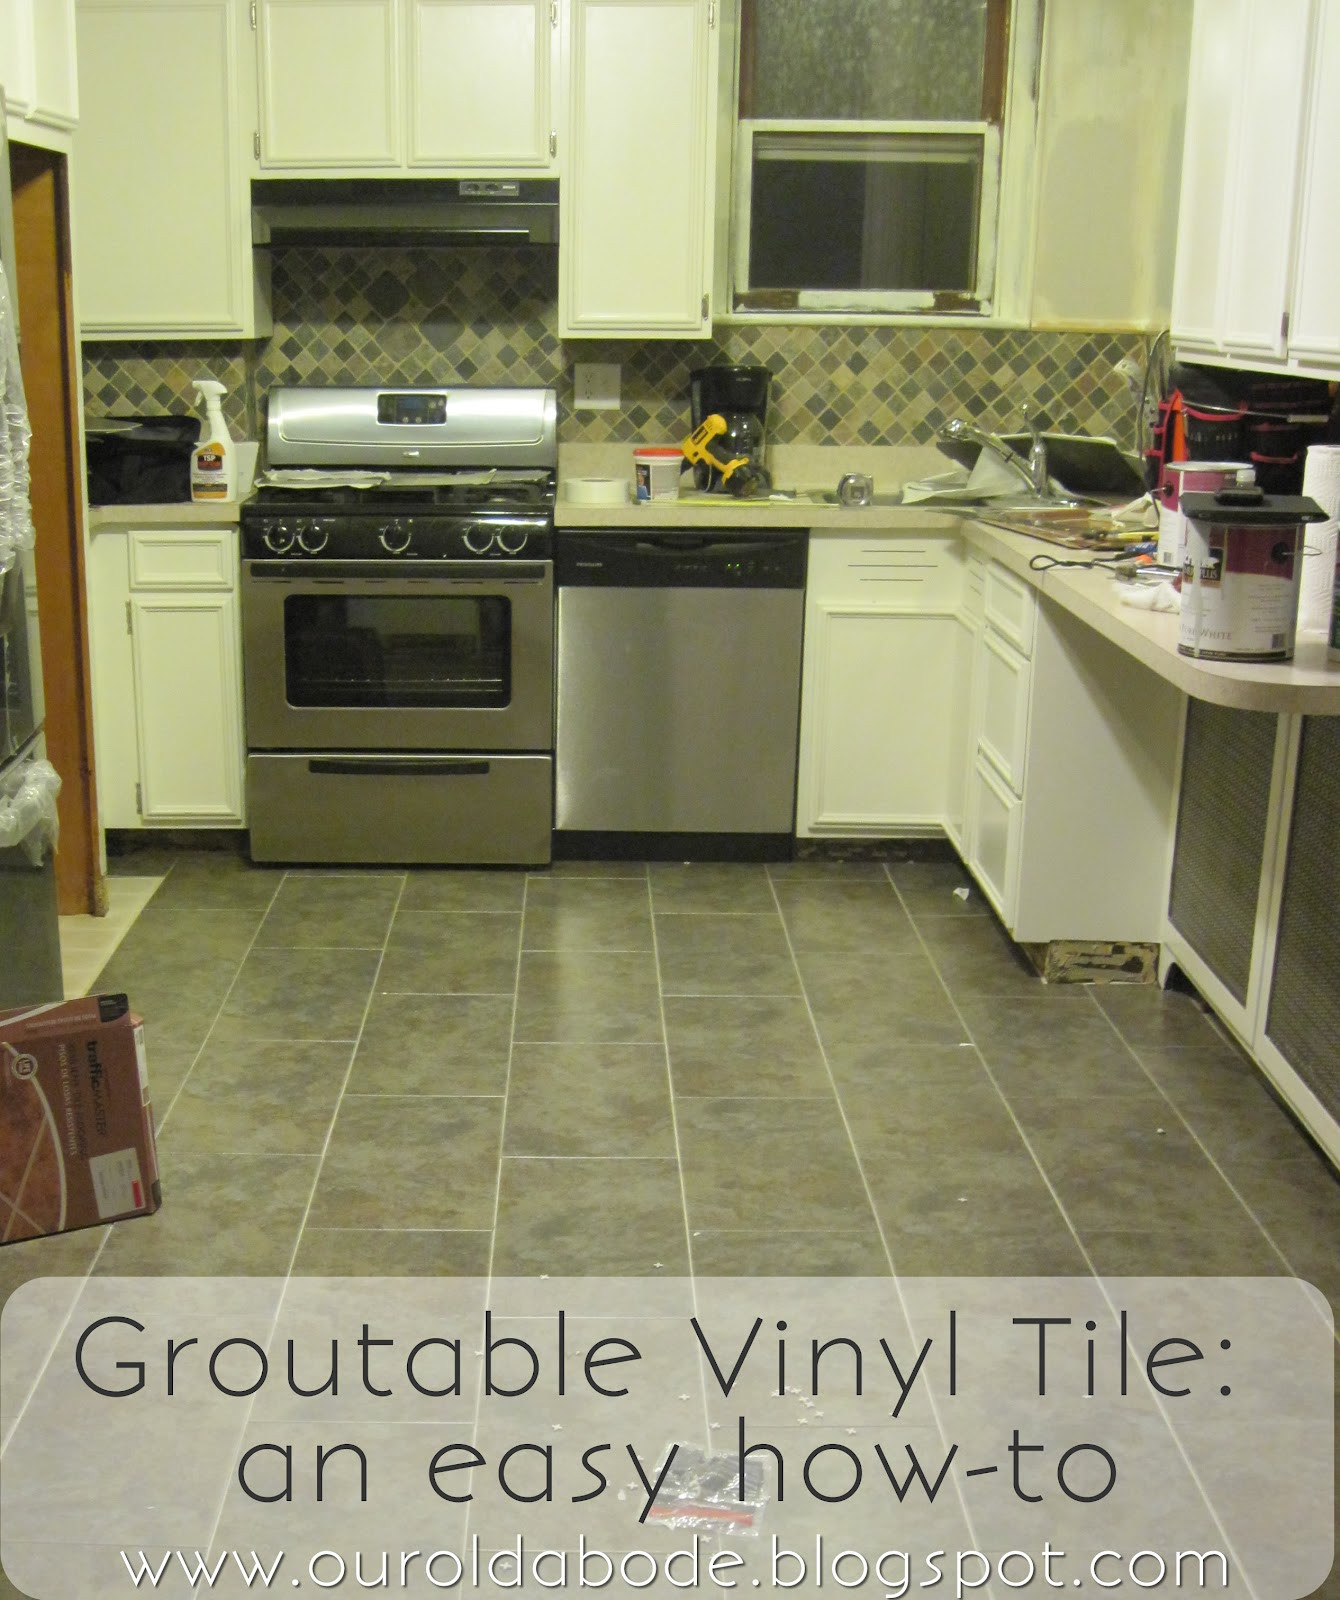 Vinyl Kitchen Floor
 Our Old Abode Kitchen Floor Groutable Vinyl Tile